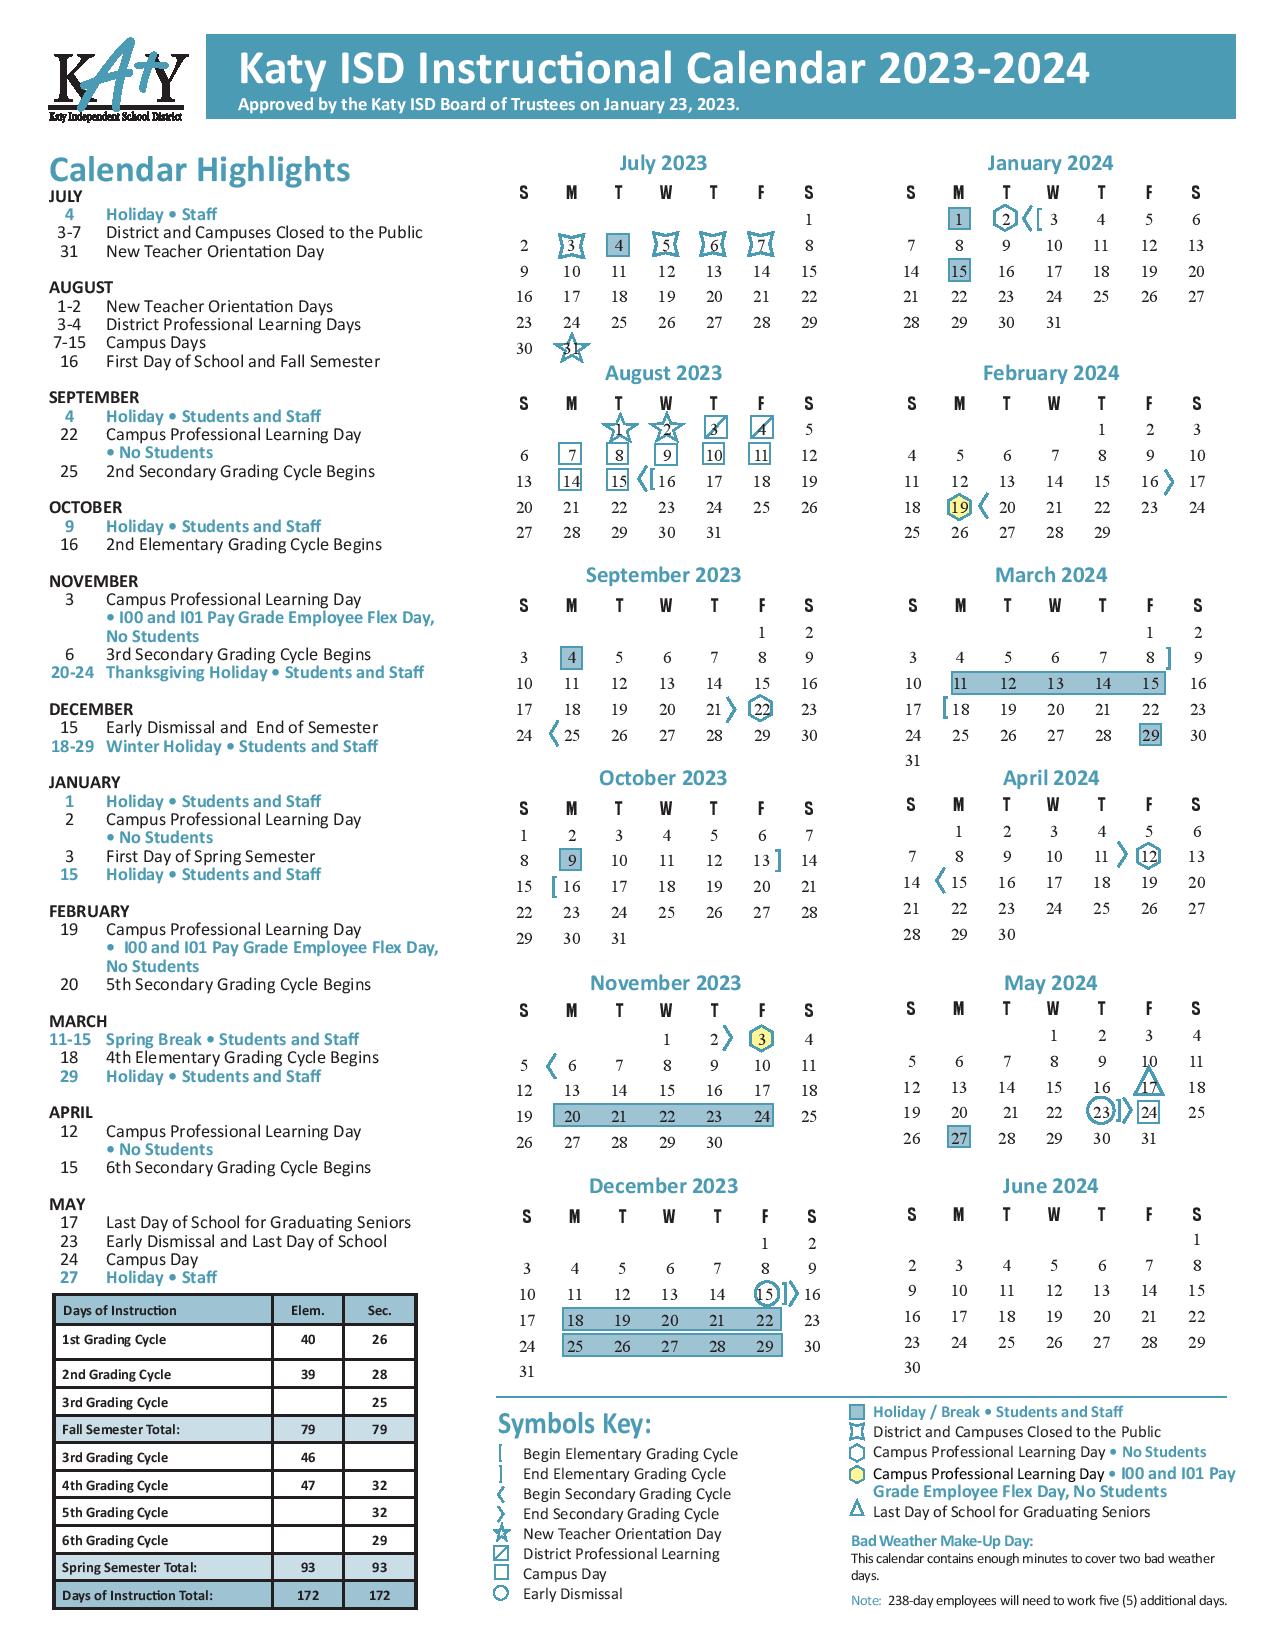 Katy Independent School District Calendar Holidays 2023 2024